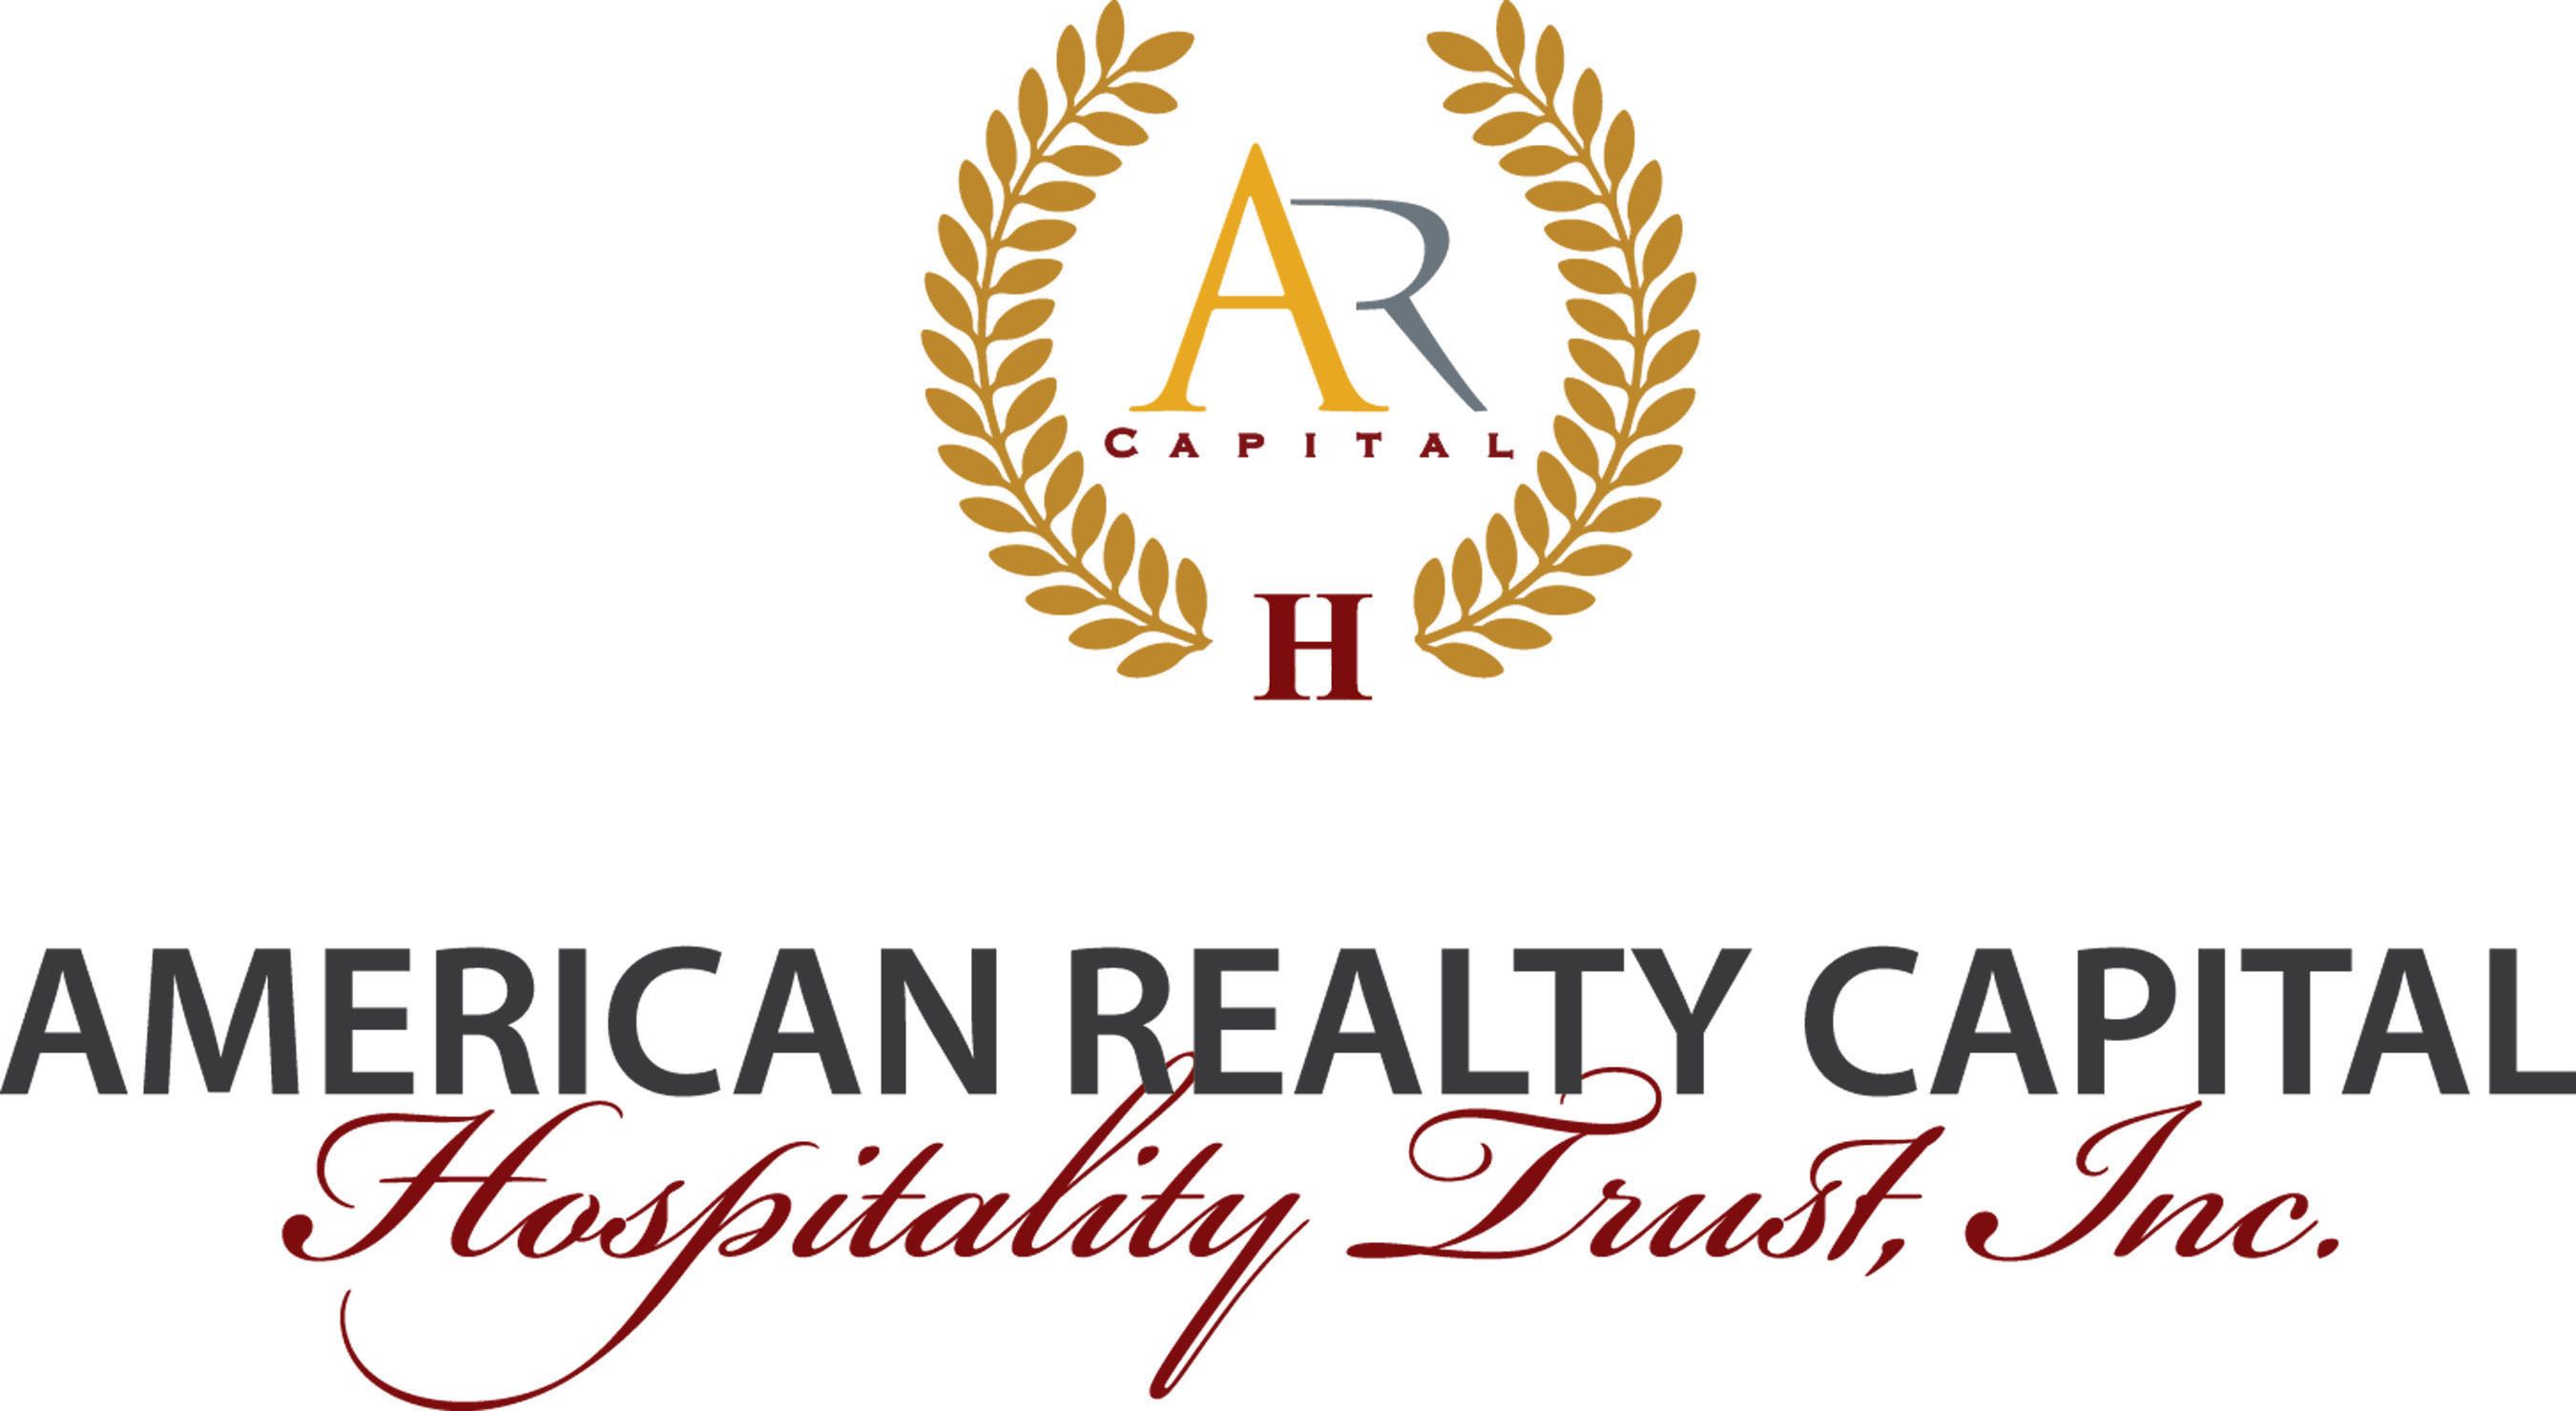 American Realty Capital Hospitality Trust, Inc. Logo.